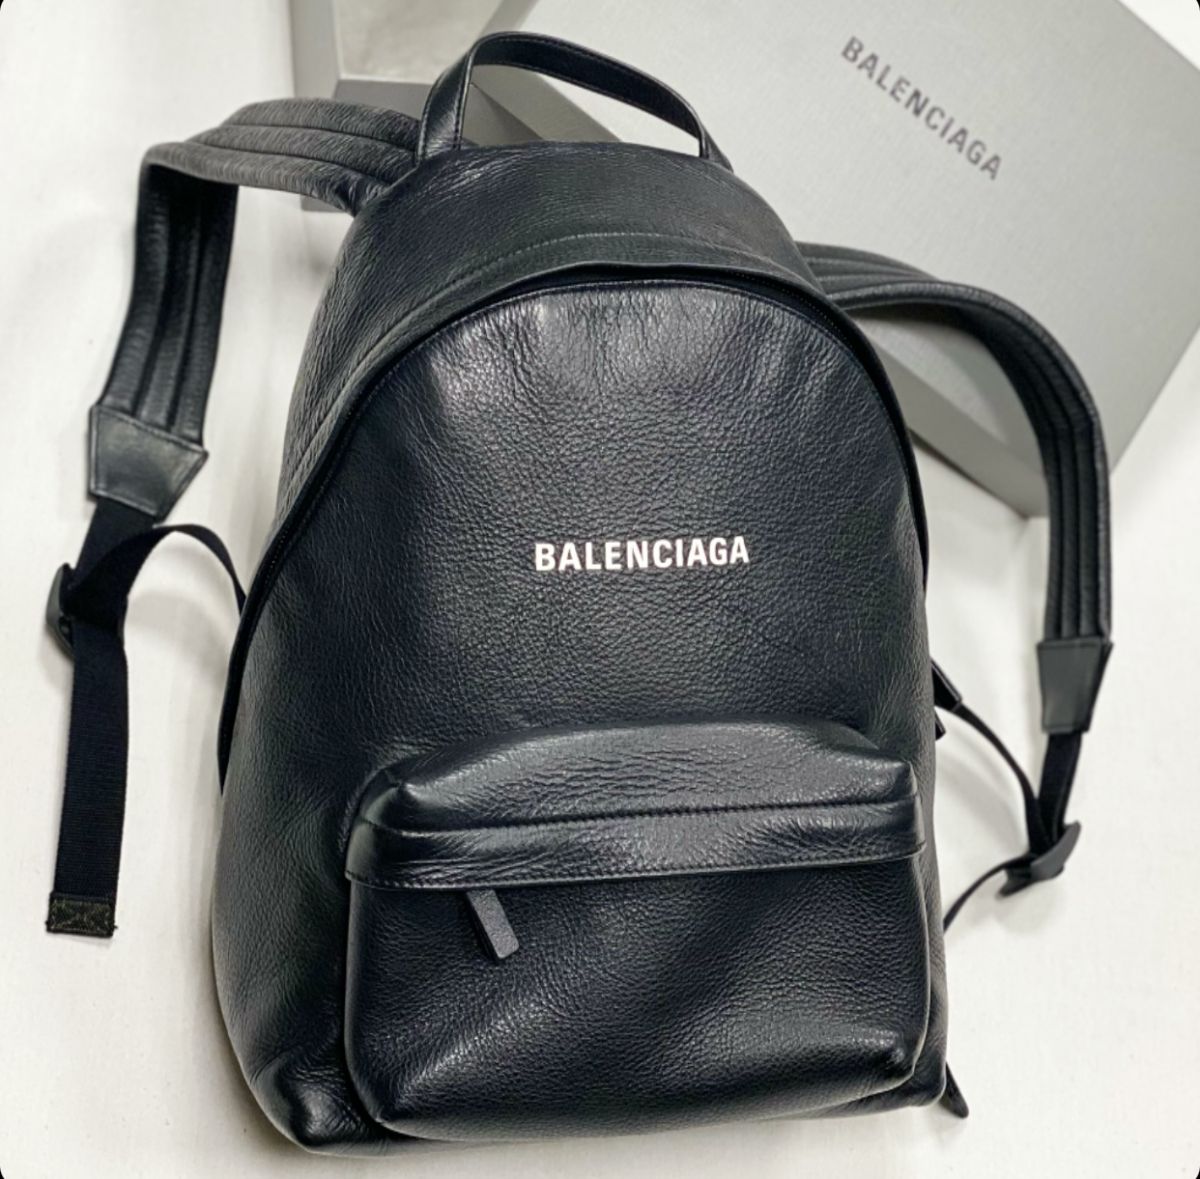 Рюкзак Balenciaga размер 25/30 цена 61 540 руб 